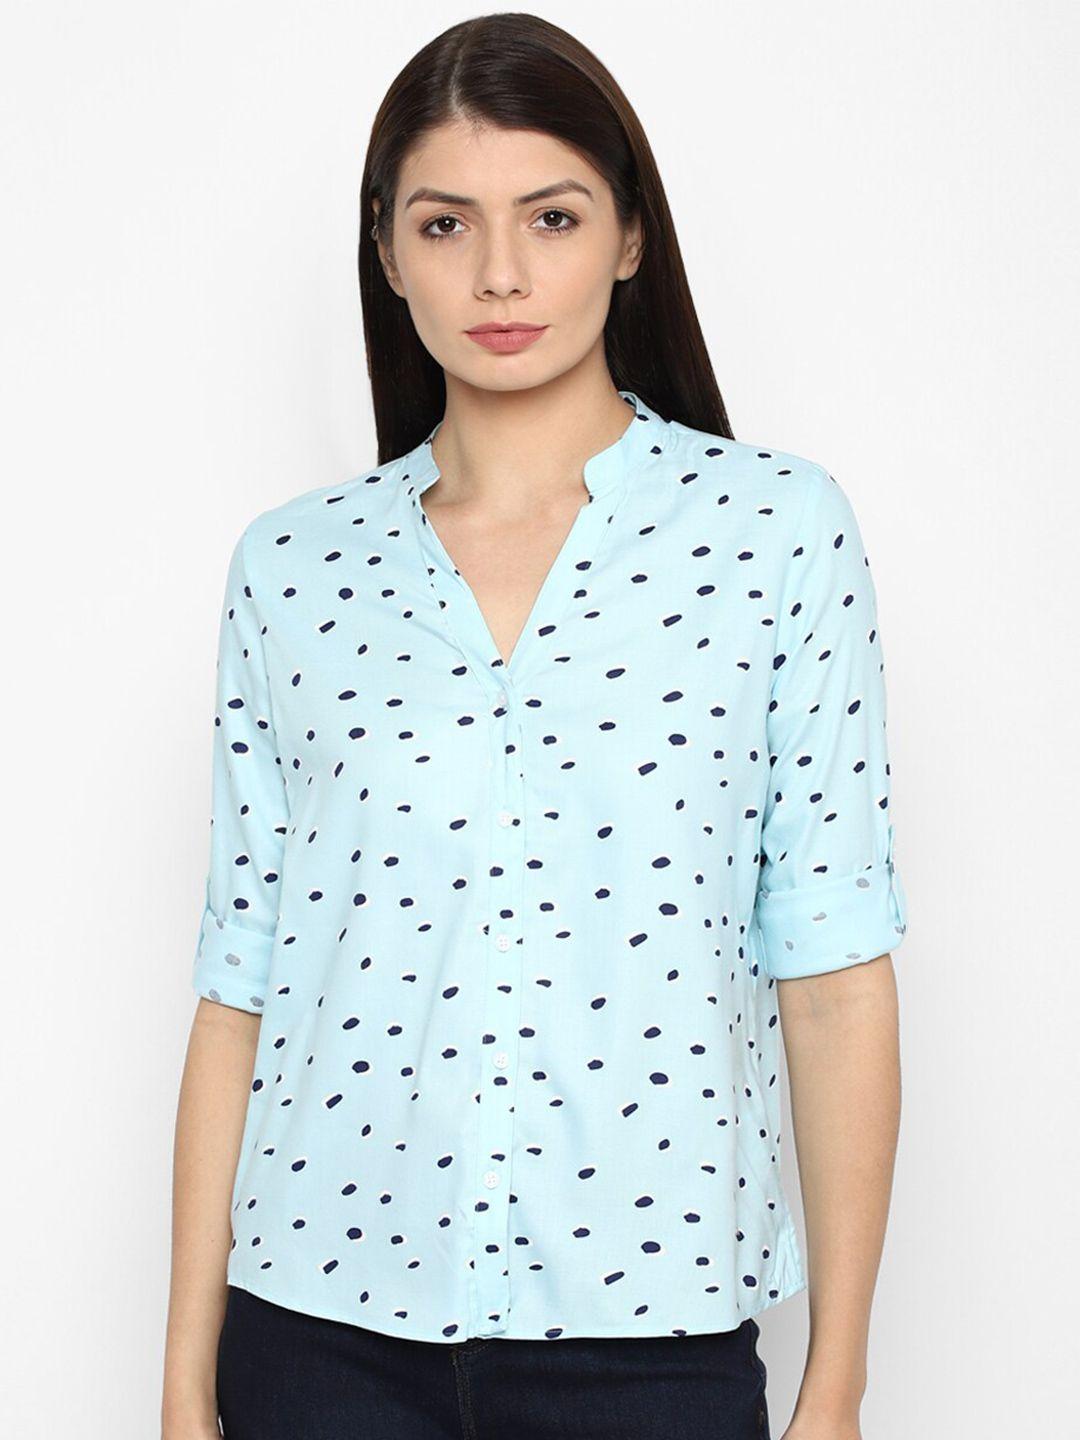 allen solly woman women blue printed casual shirt